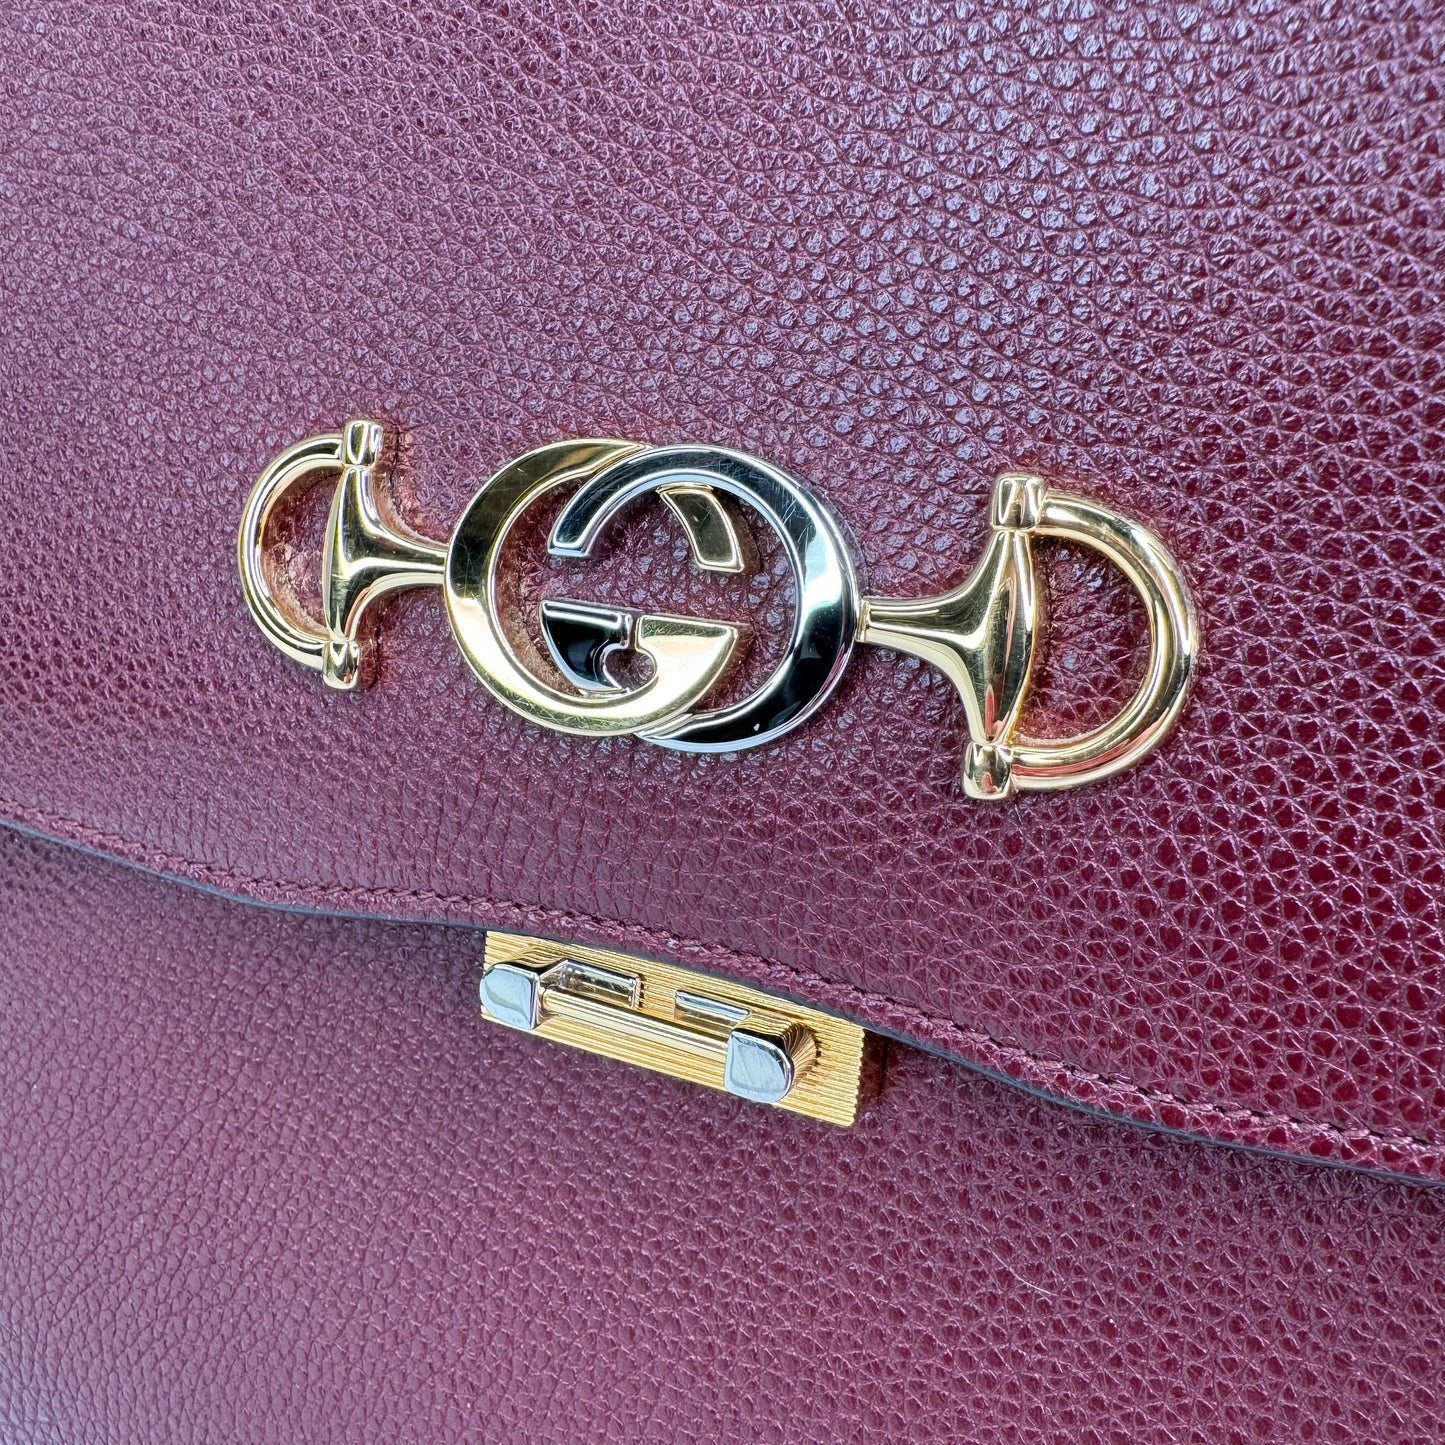 Gucci Zumi Horsebit Briefcase Burgundy Bag